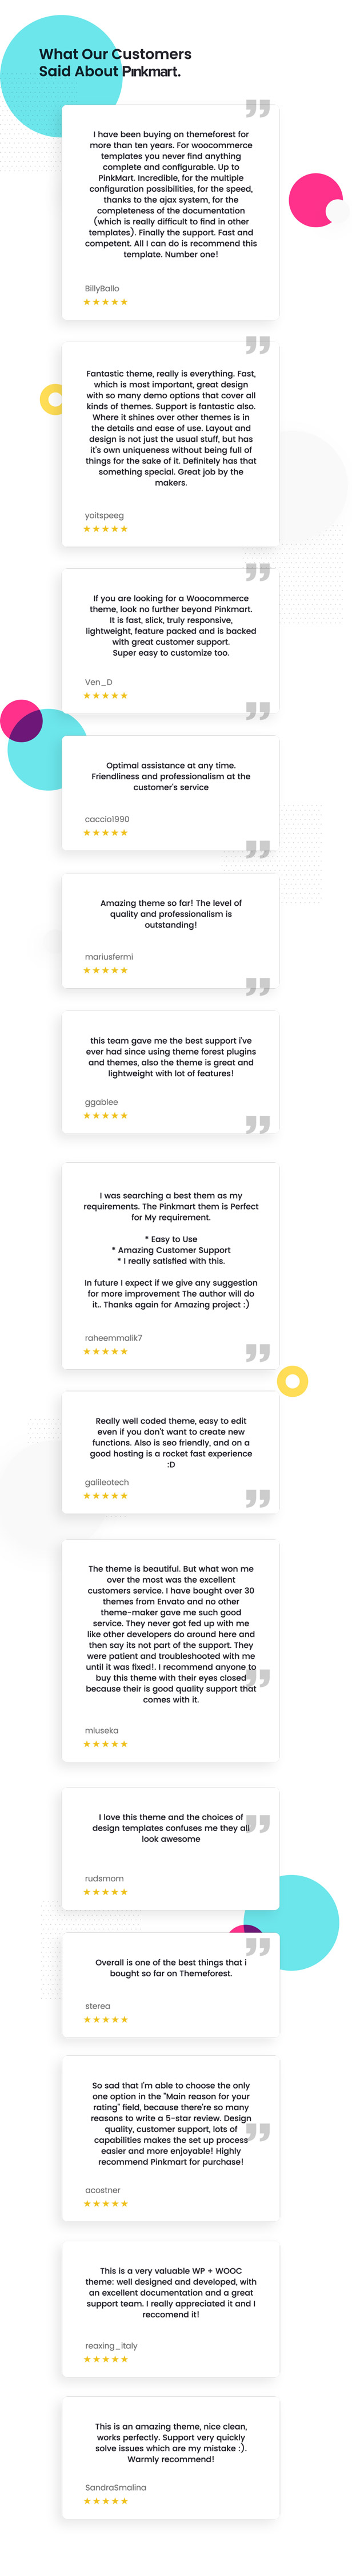 Pinkmart - WooCommerce WordPress Theme - customers review